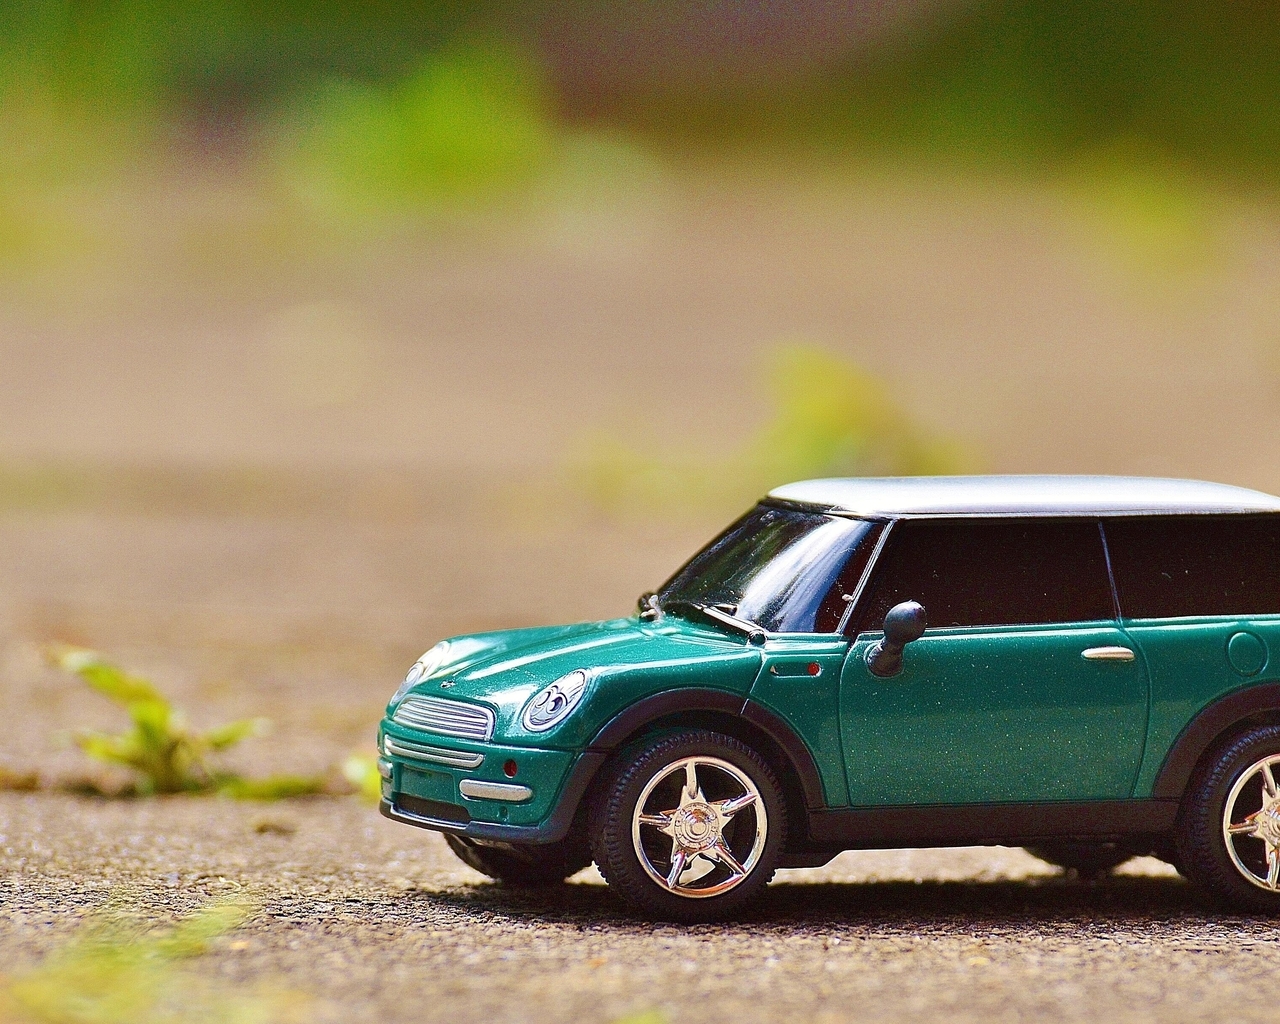 Image: Car, model, Mini Cooper, asphalt, grass